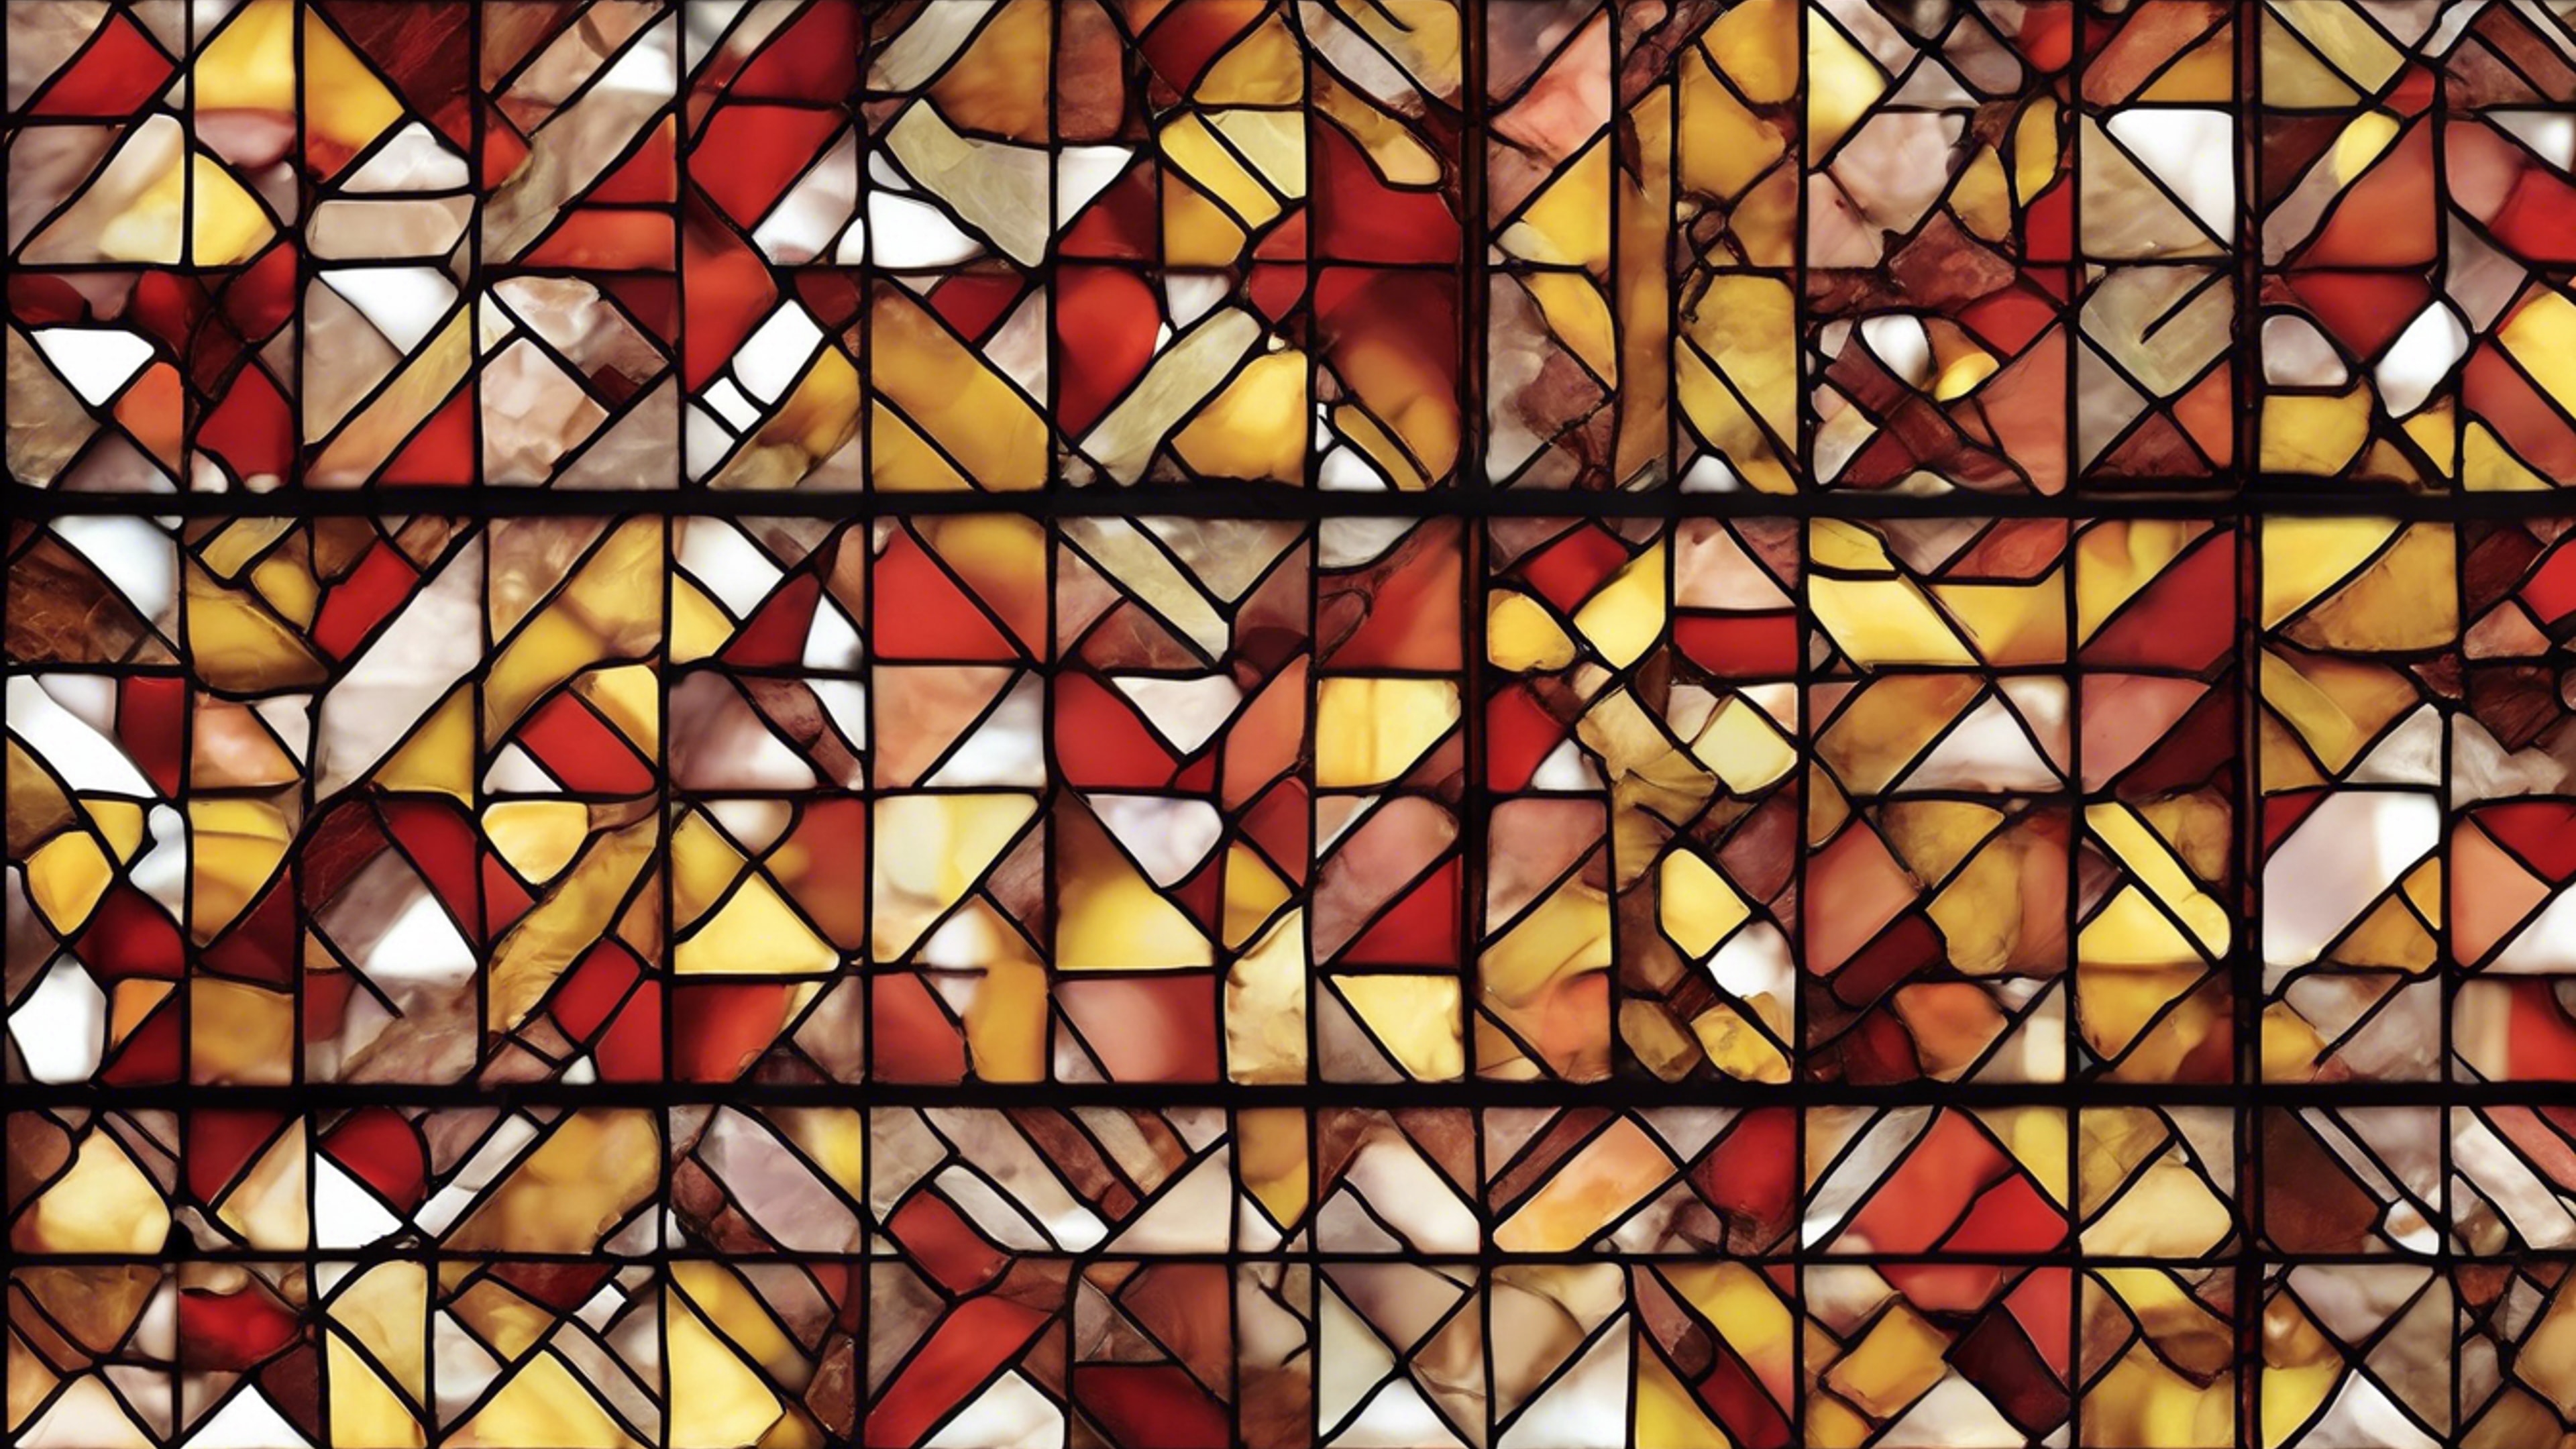 A stained glass design using a repeating motif of red and yellow bricks. Divar kağızı[d98aa8b1ebac46789cc9]